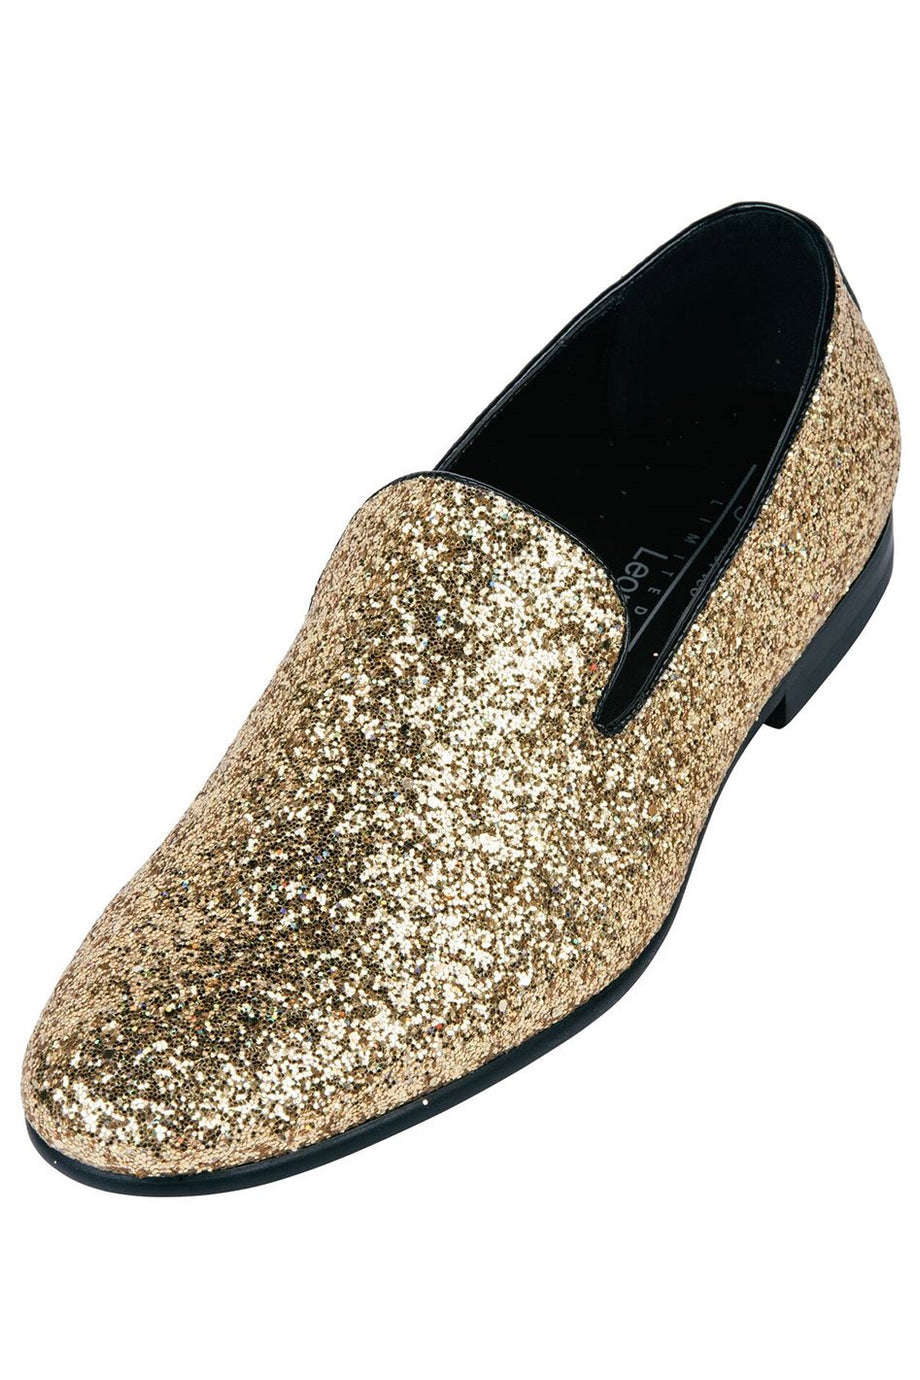 Frederico Leone "Sparkle" Gold Shoes